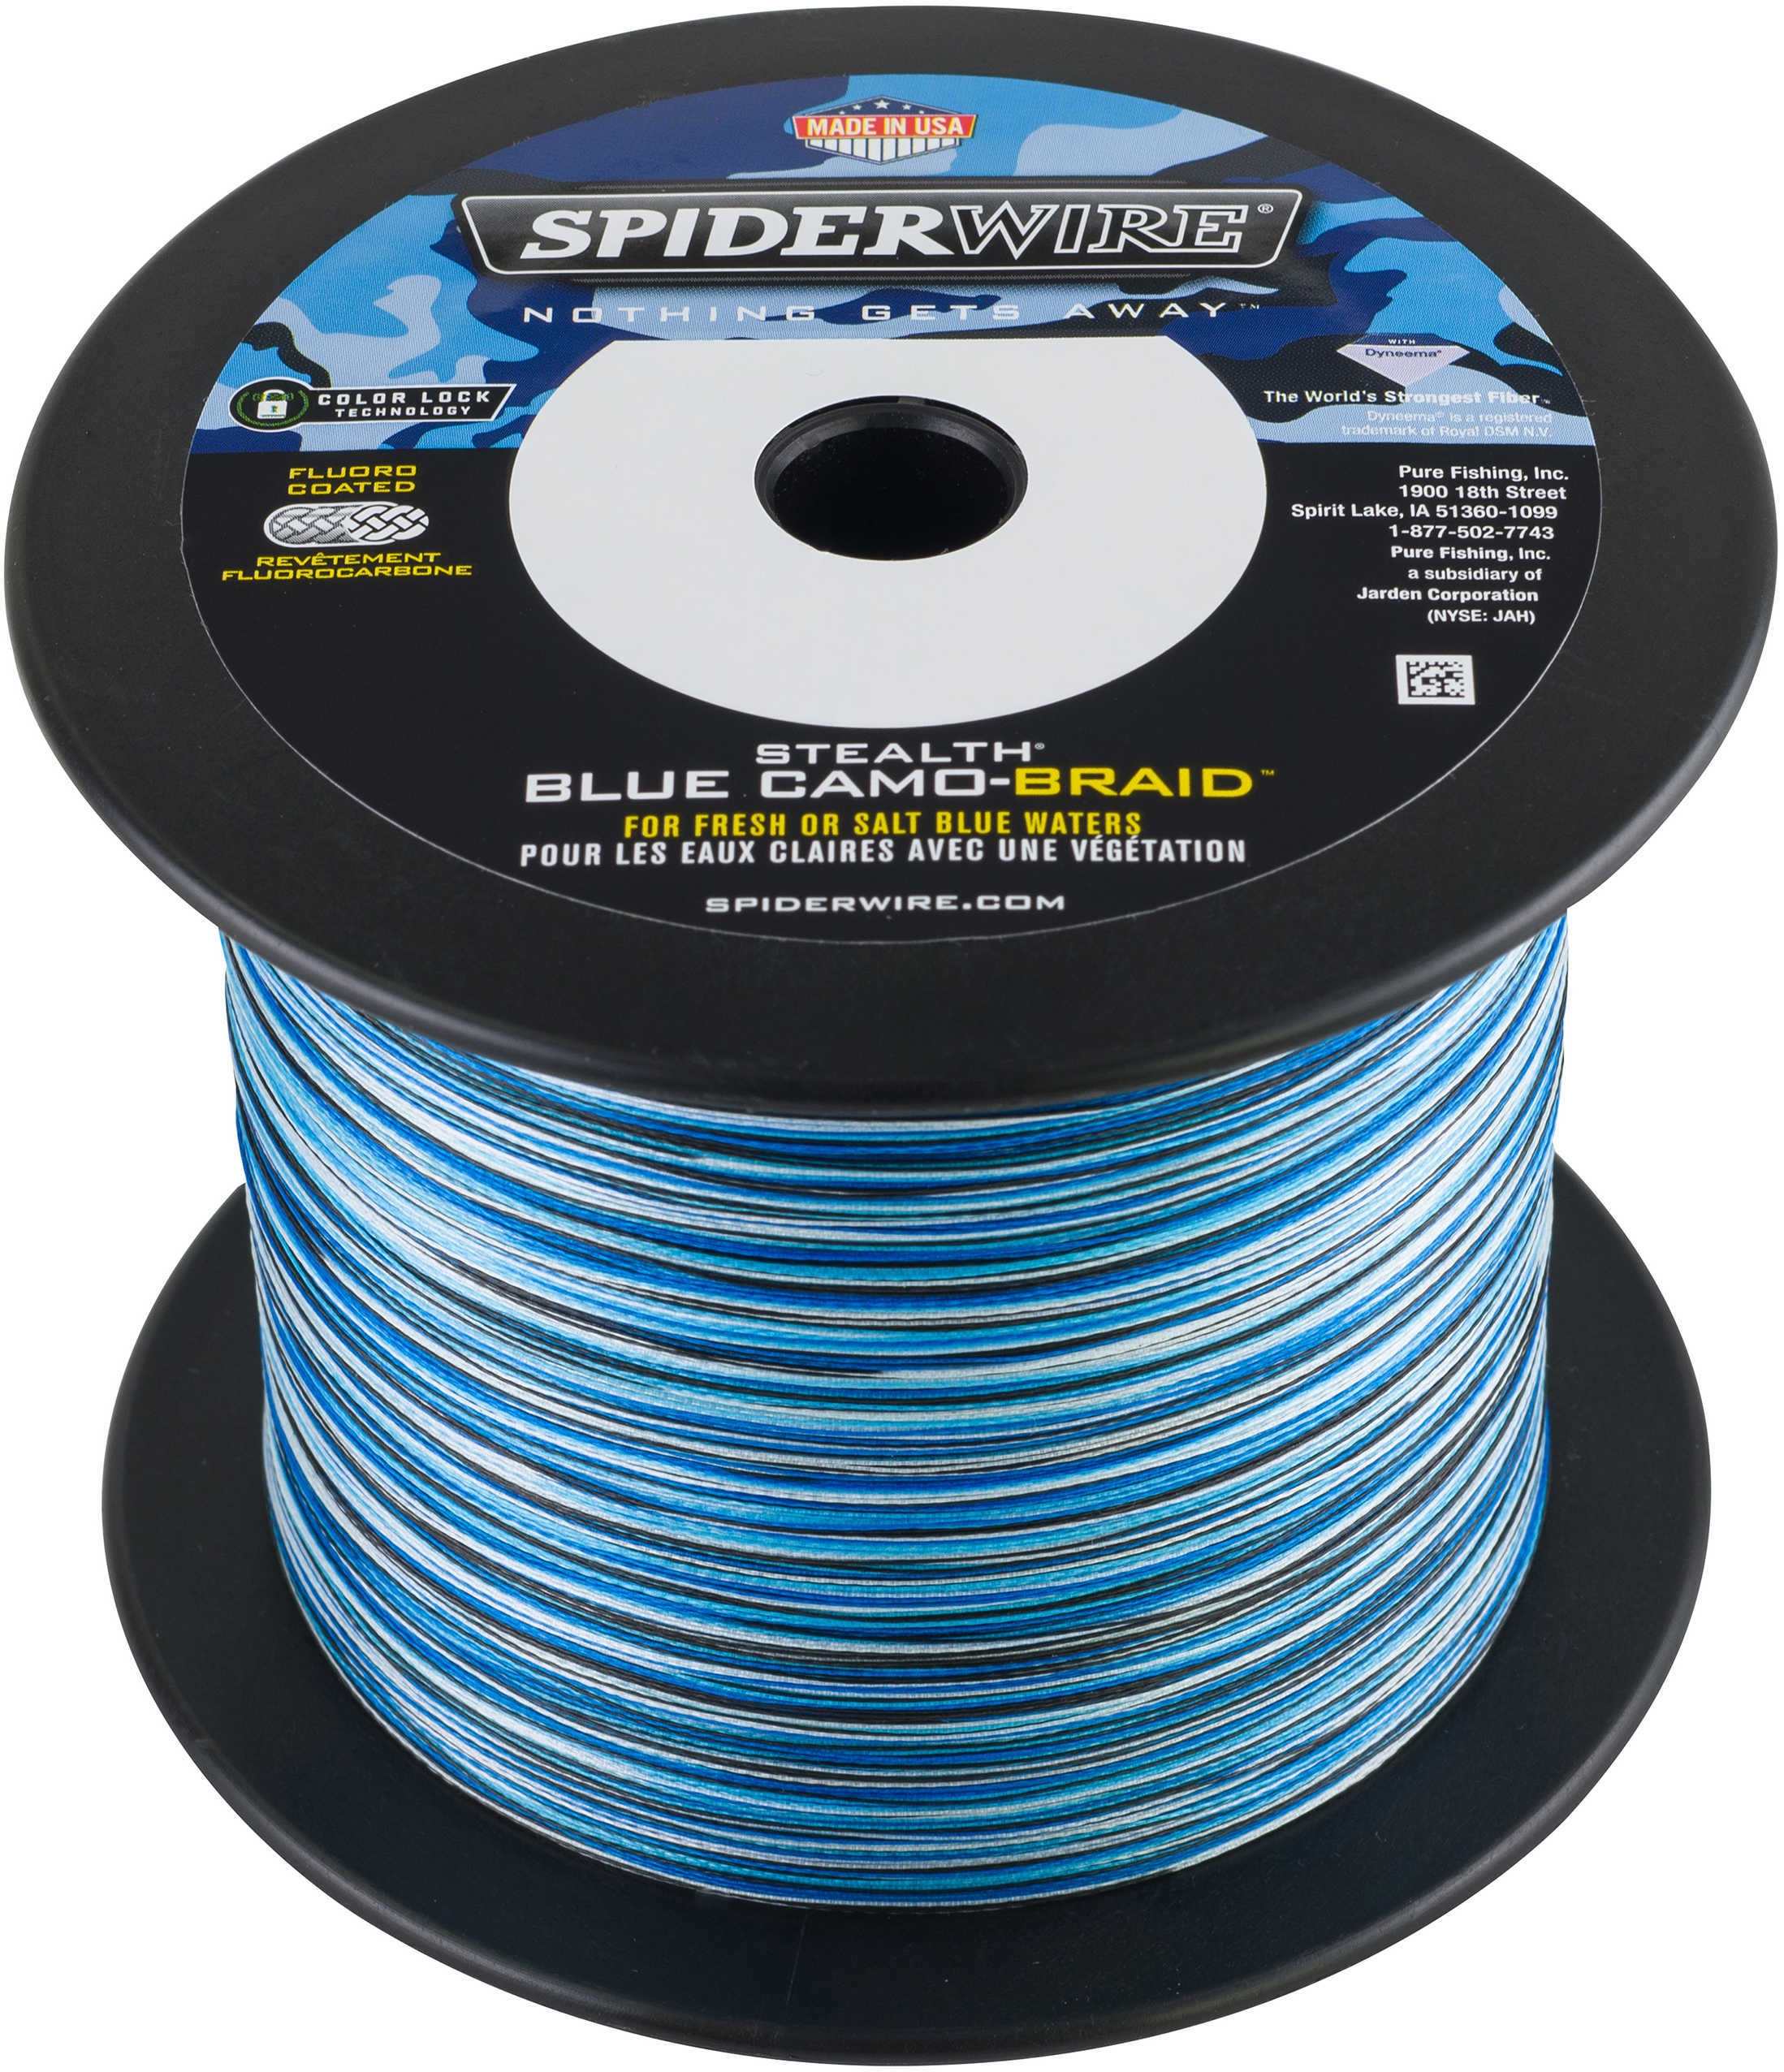 Spiderwire Stealth Braid 3000 Yards , 10 lbs Strength, 0.008" Diameter, Blue Camo Md: 1370462